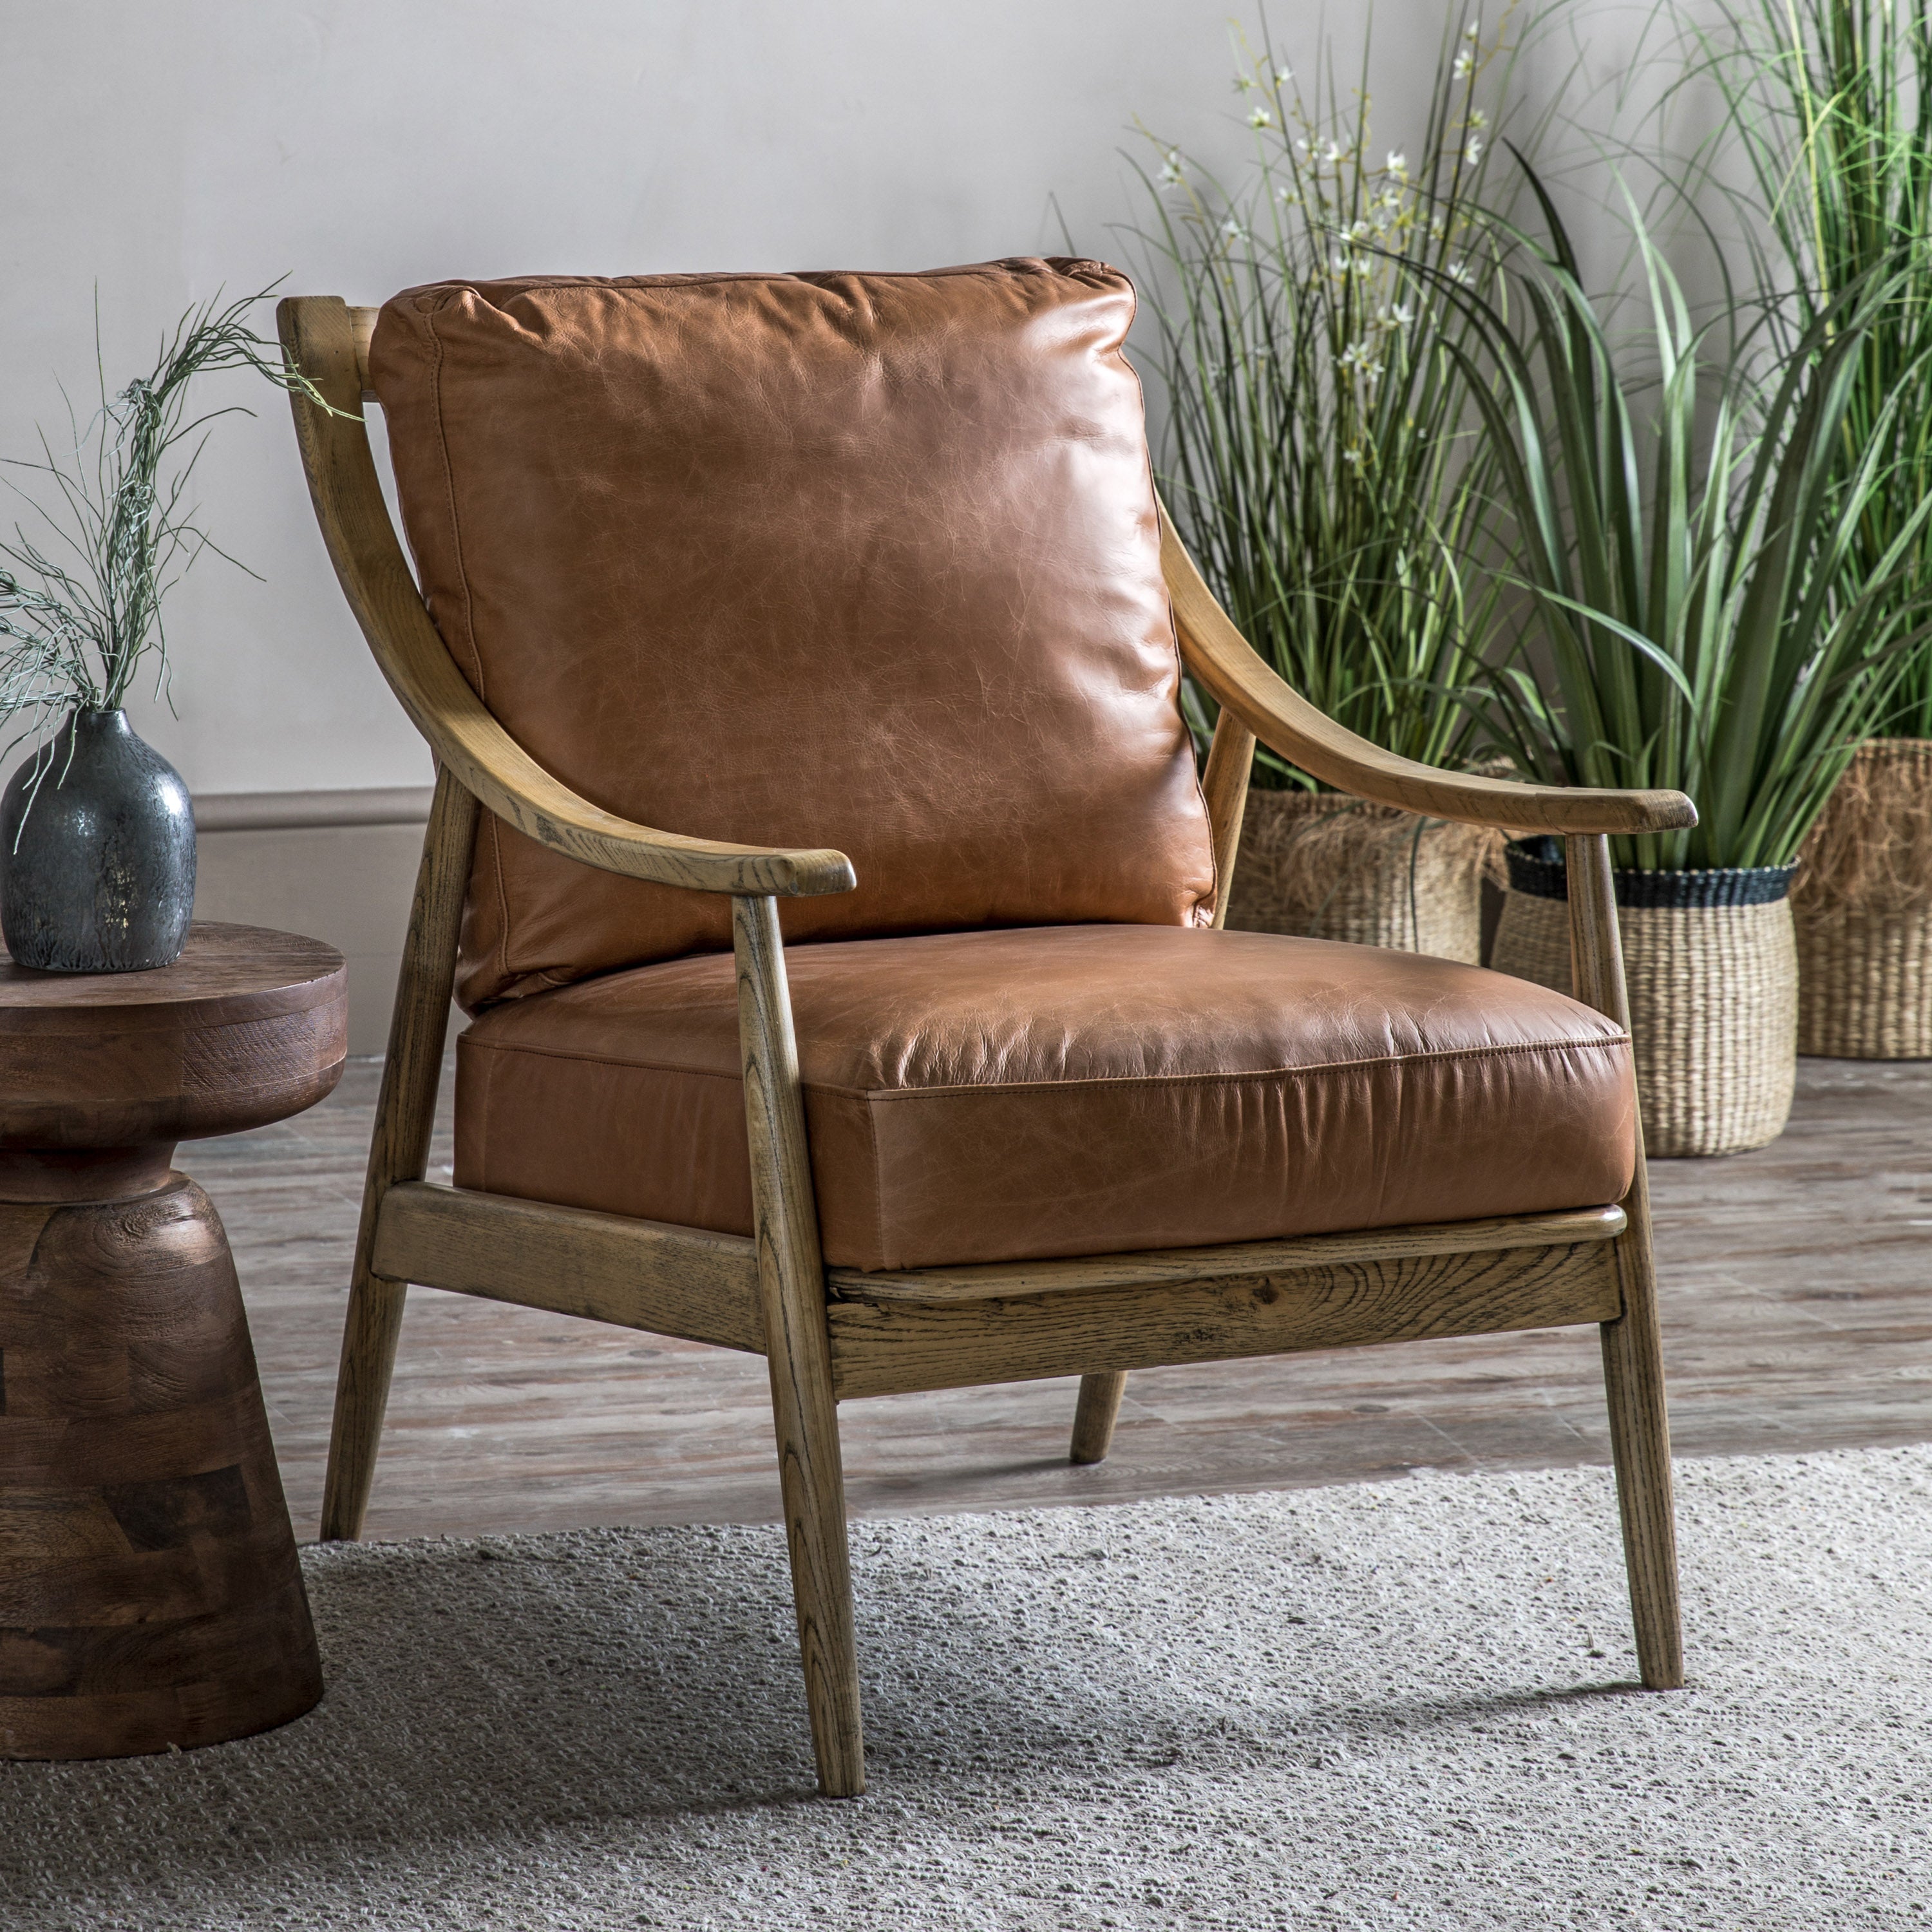 Brock Armchair in sleek Brown Leather with solid wood frame | MalletandPlane.com